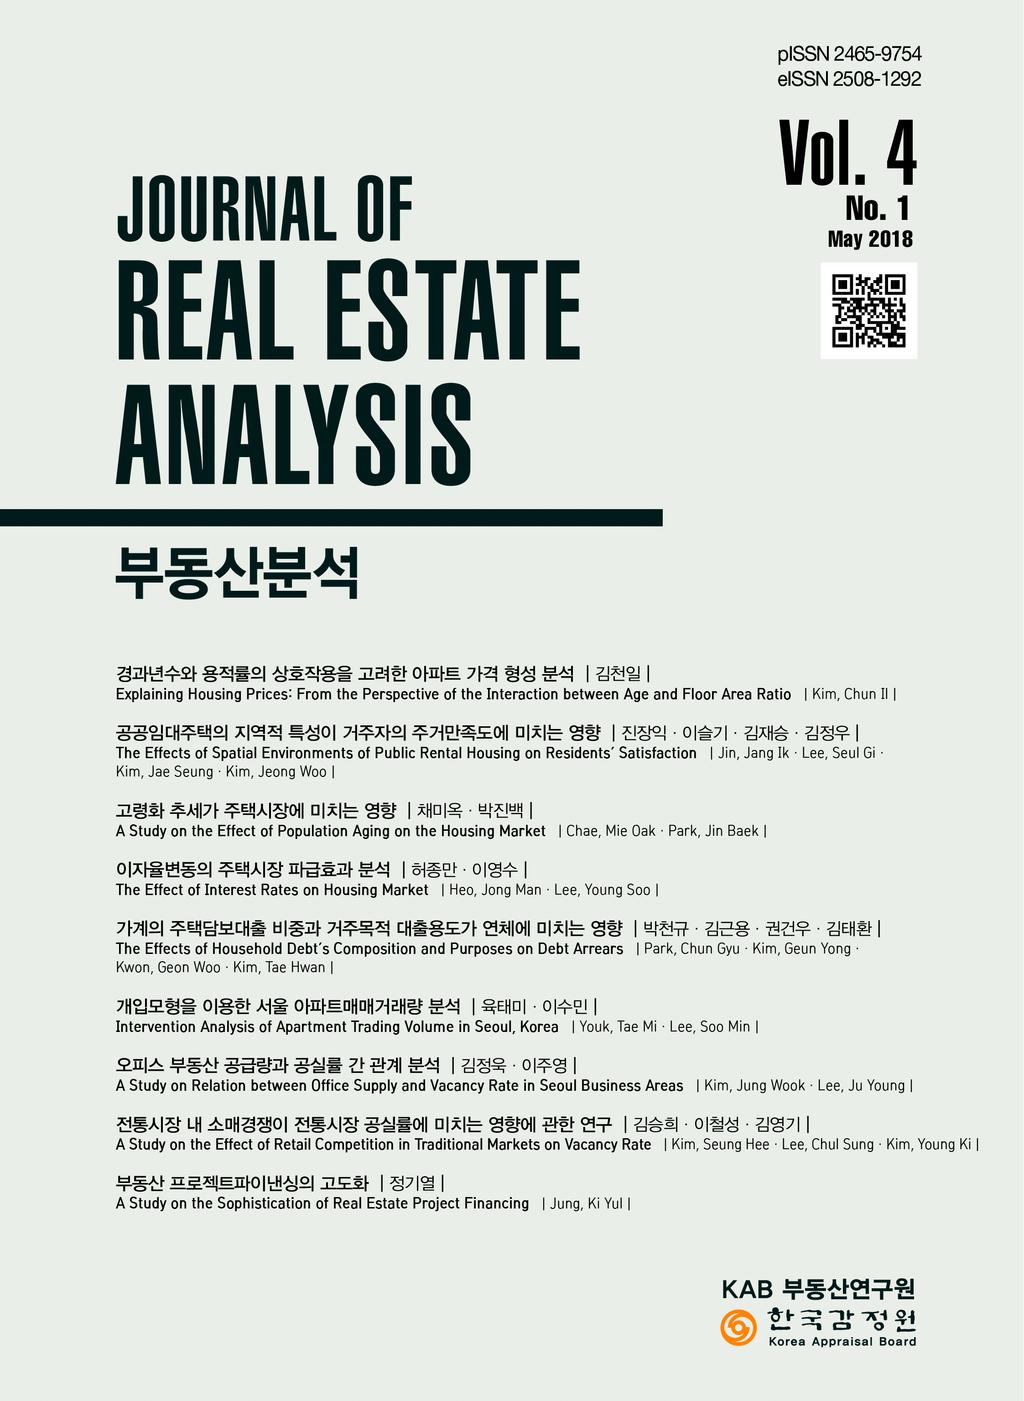 pissn : 2465-9754 eissn : 2508-1292 https://doi.org/10.30902/jrea.2018.4.1.129 Journal of Real Estate Analysis http://www.kabjrea.org May 2018, Vol.4, No.1, pp.